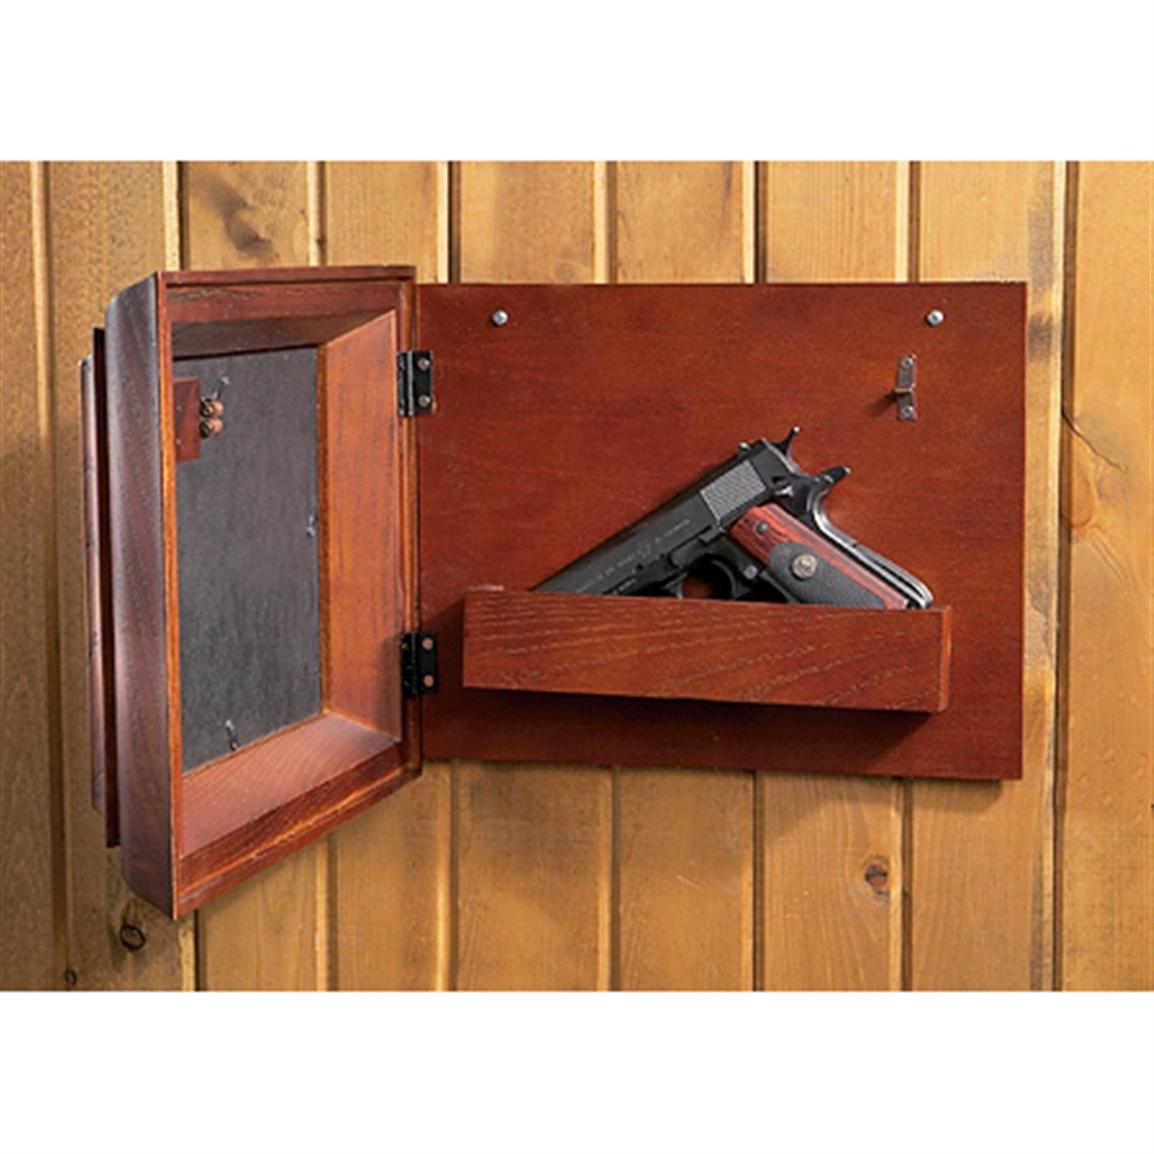 Hide A Gun Picture Frame, Dark Oak 83810, Gun Safes at Sportsman's Guide